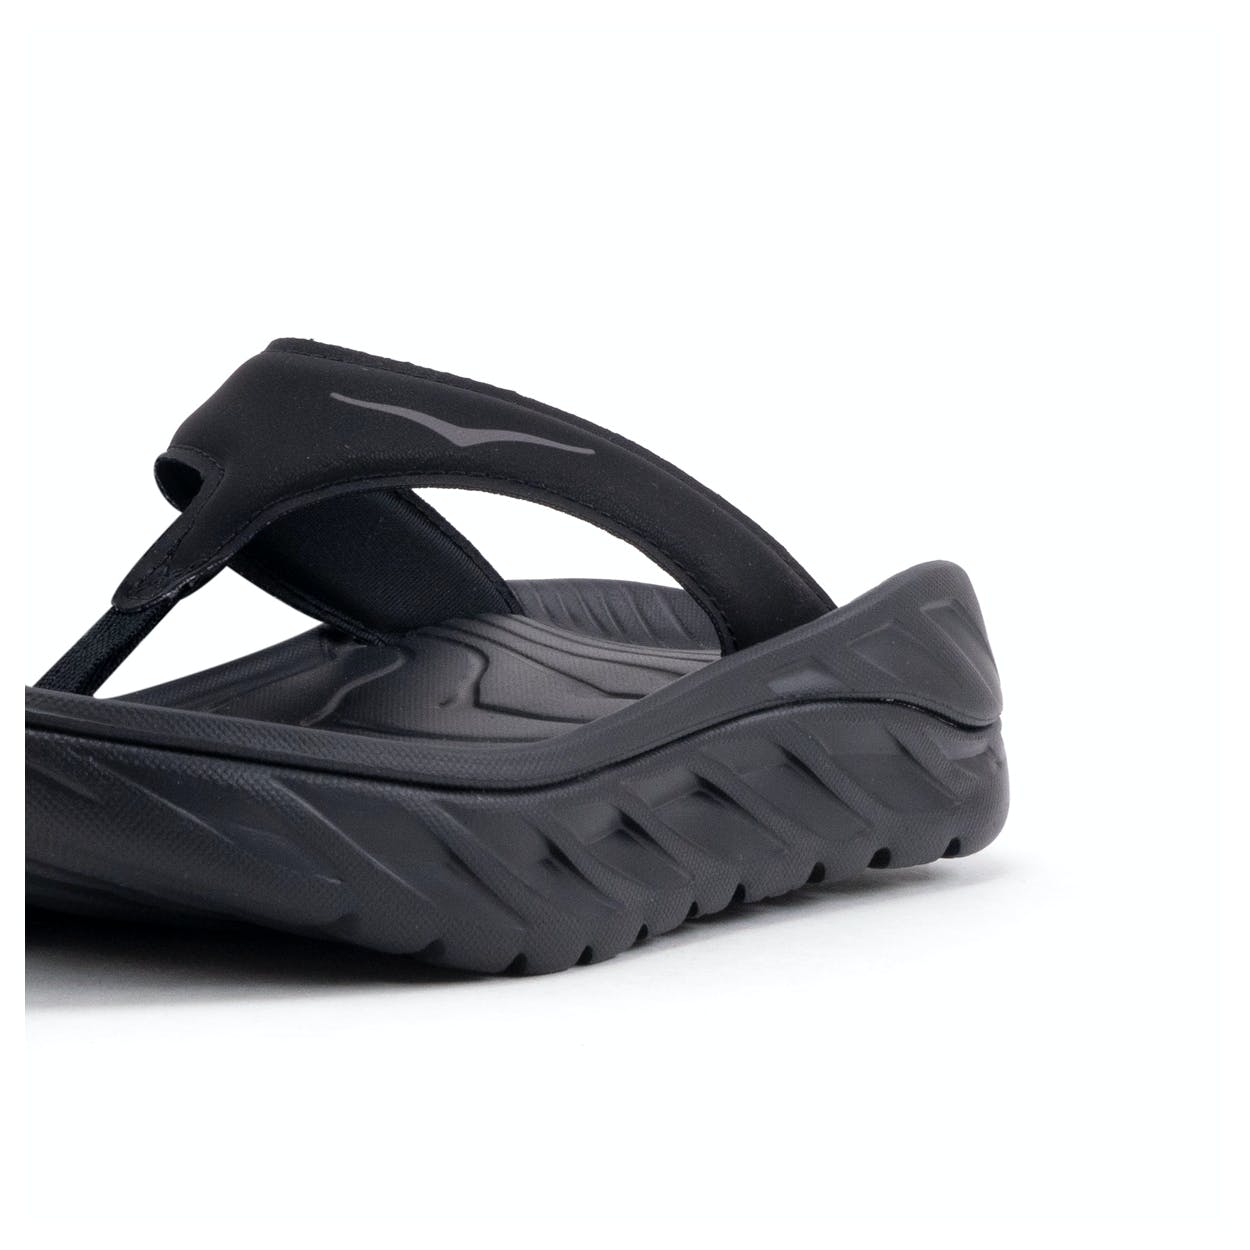 Hoka Ora Recovery Women's Flip Sandal -- Black / Dark Gull Gray - Size 9